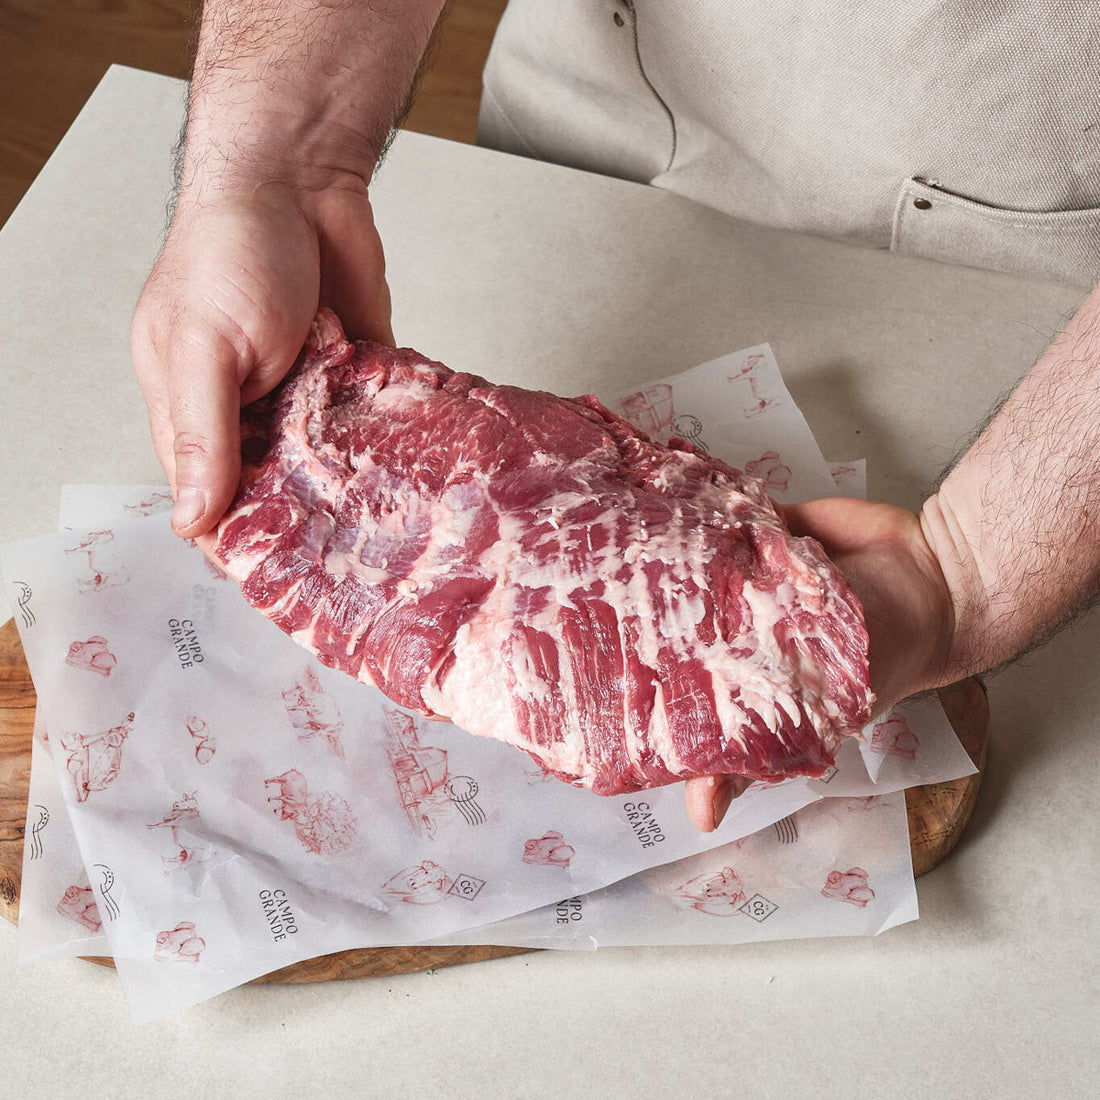 How We Cook a Juicy Pork Denver Steak: The Iberico Presa